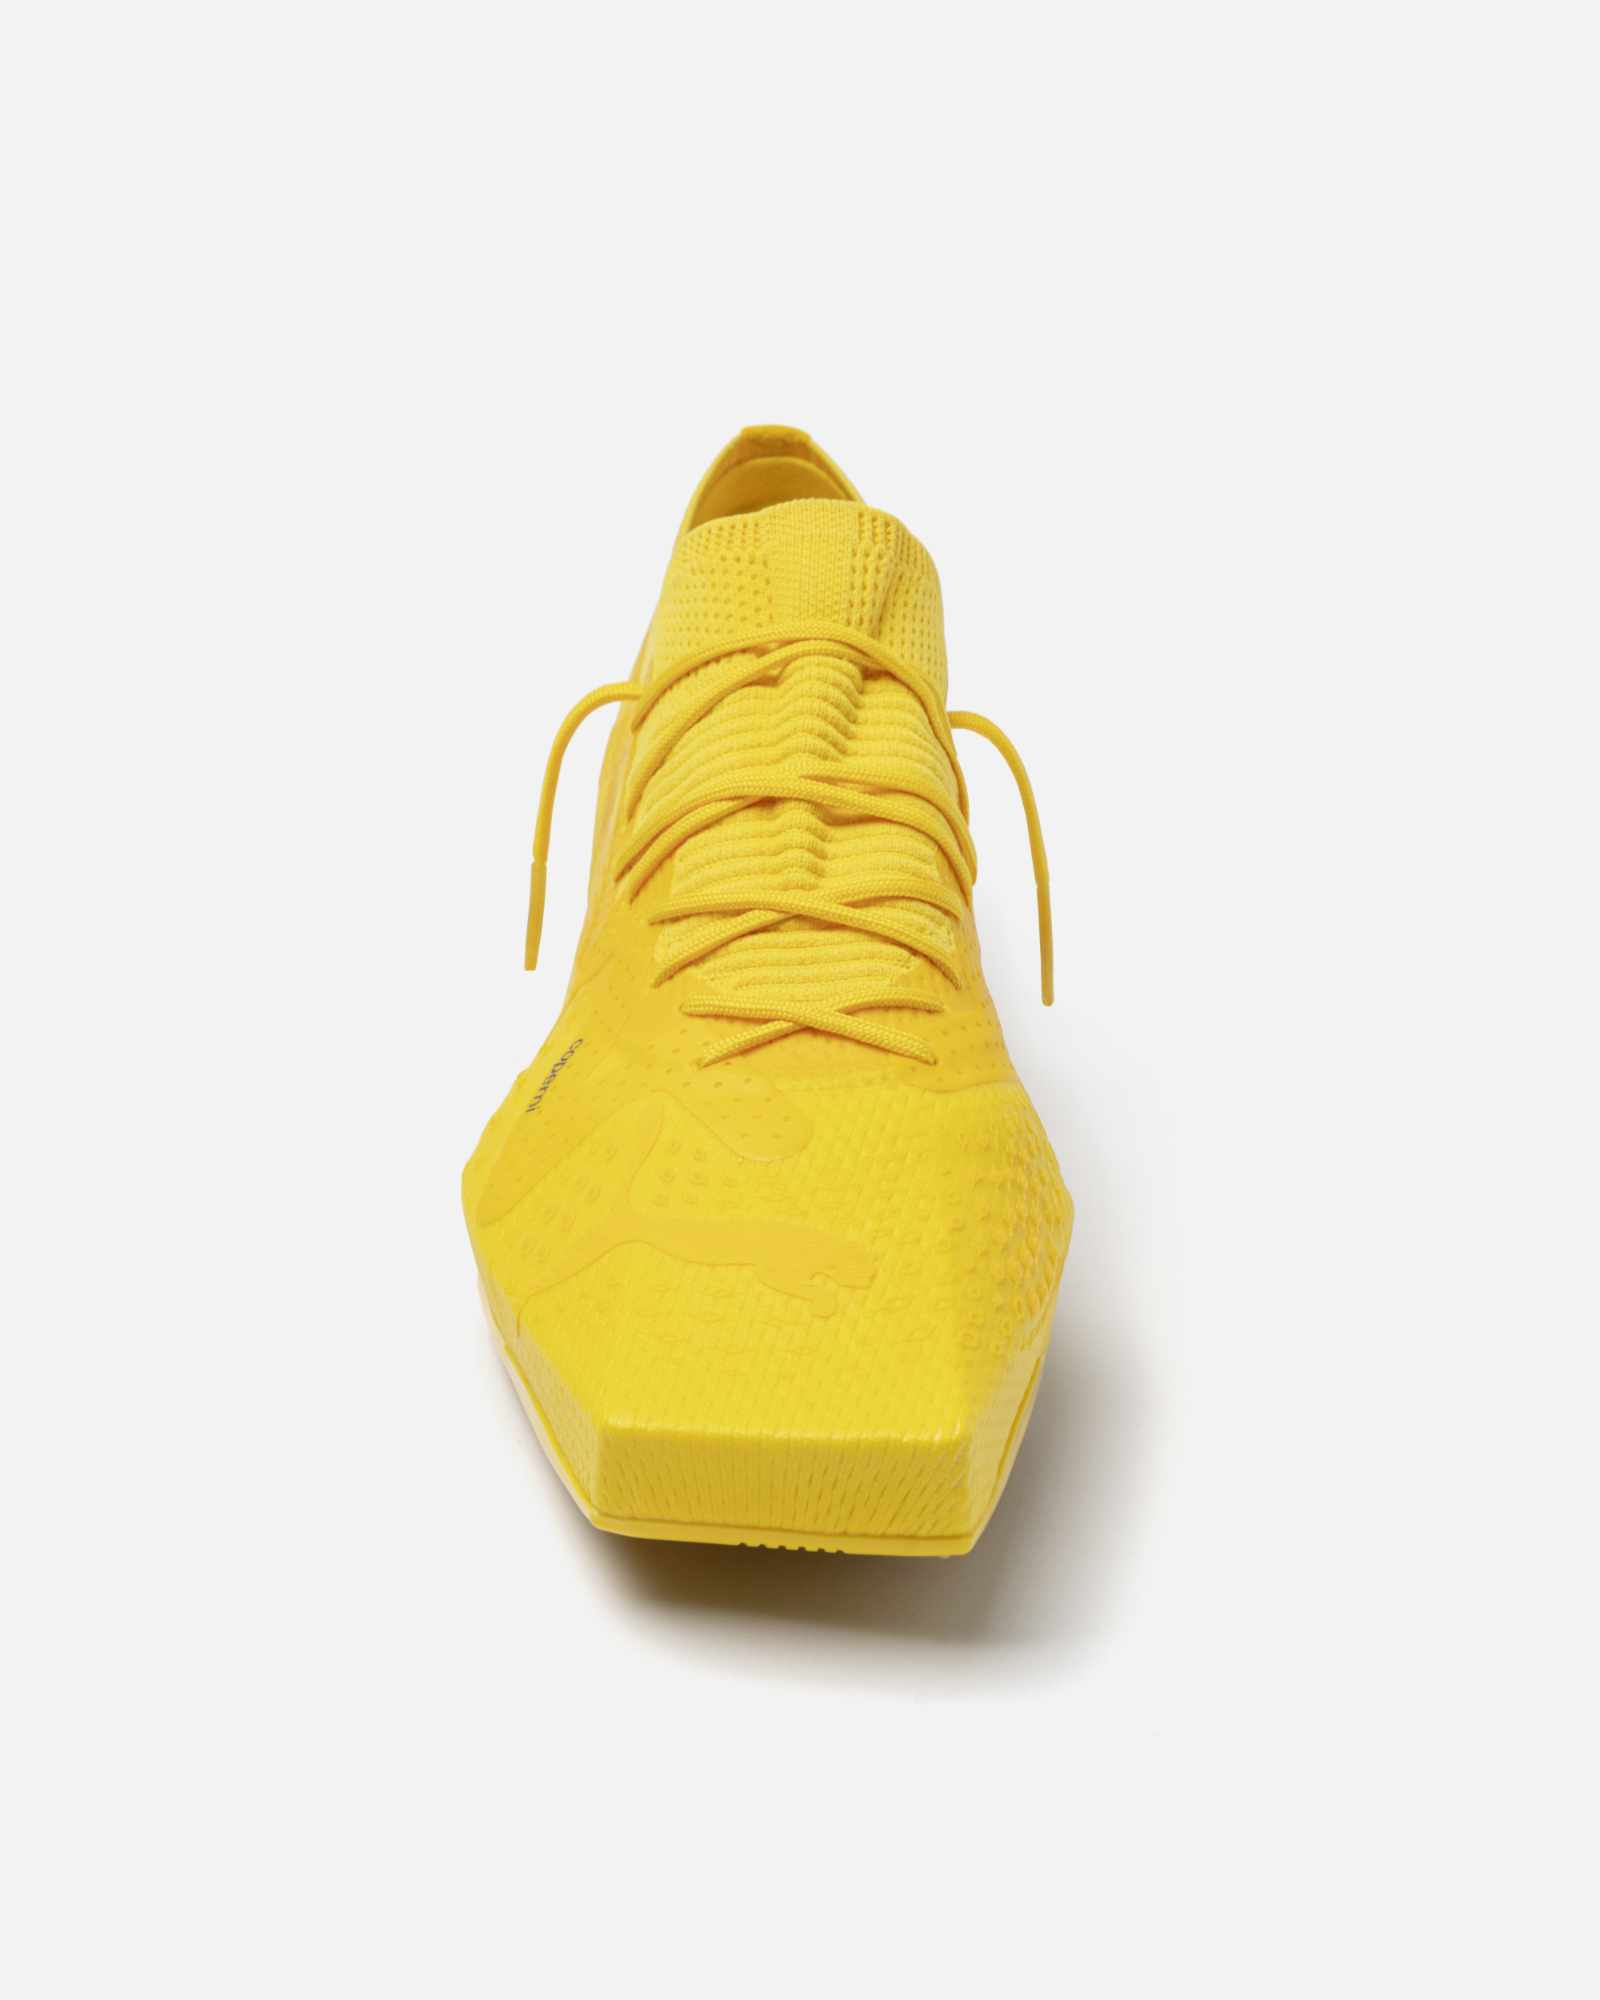 PUMA and Coperni Reimagined Football Boots as Dress Shoes